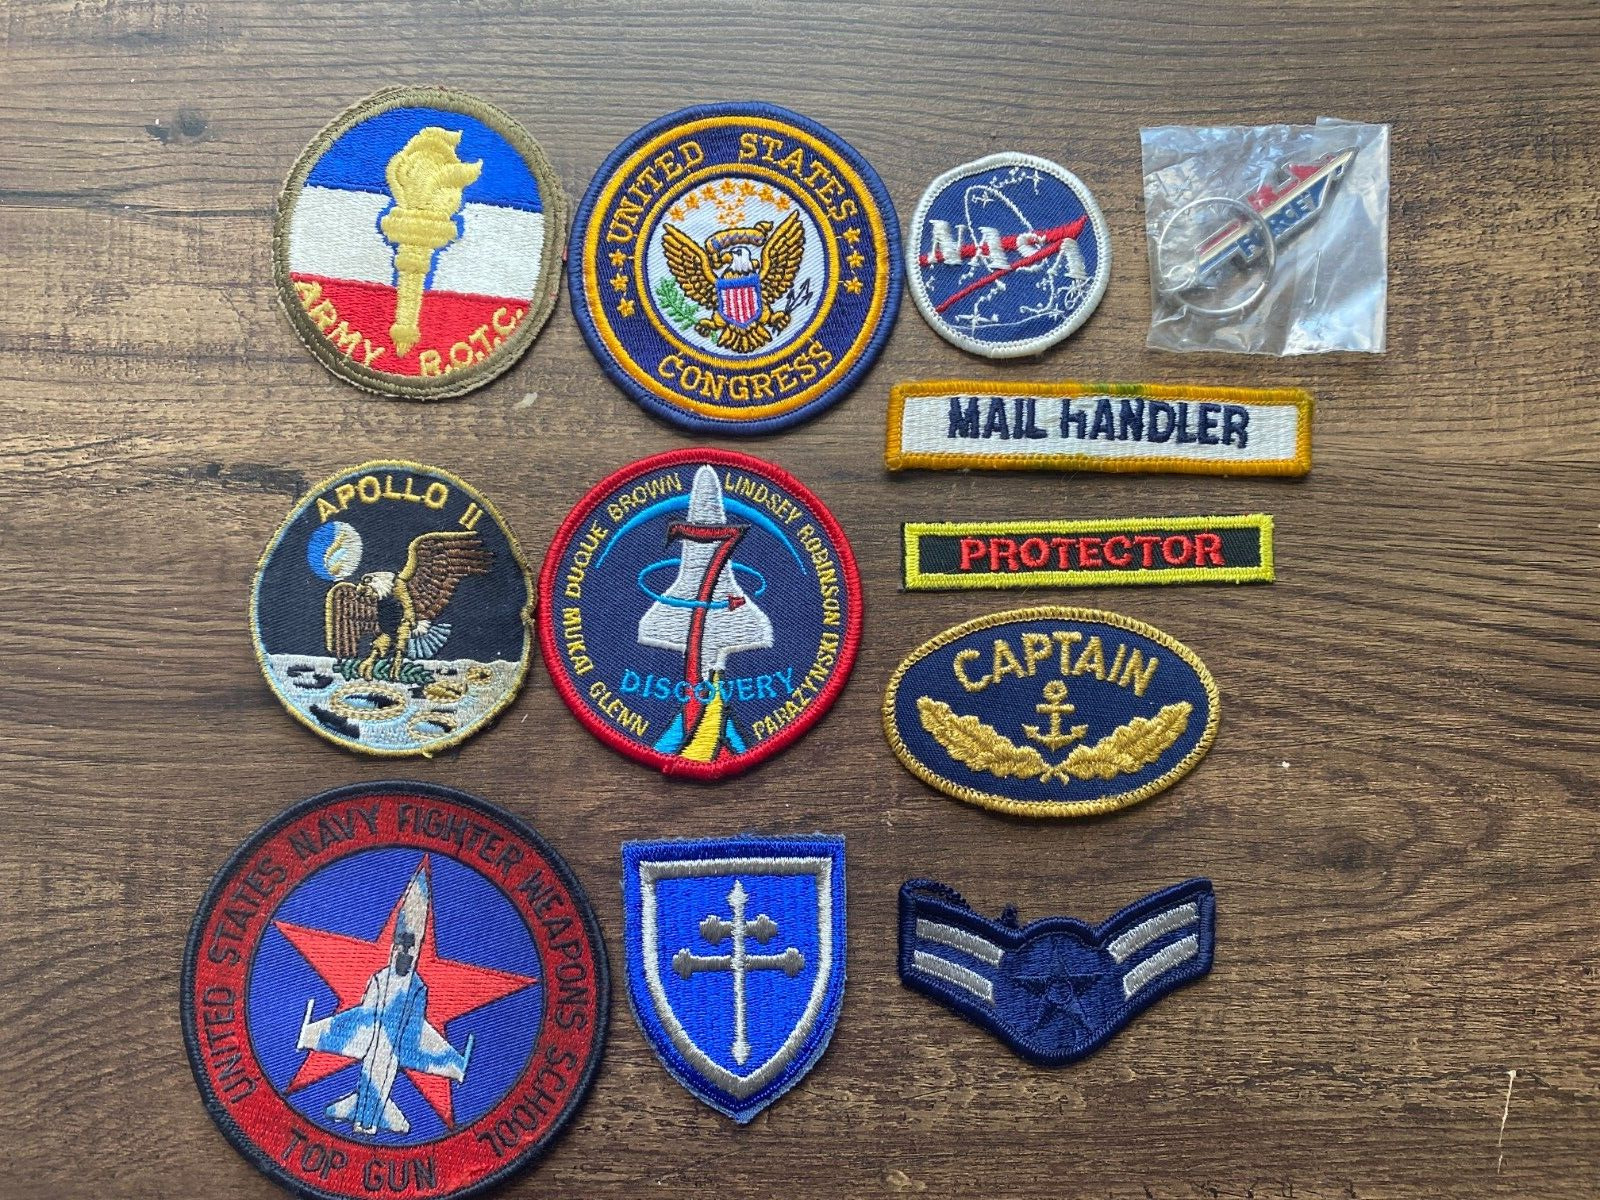 Lot of Military - NASA - US Congress - Mail Handler - Apollo II - Top Gun